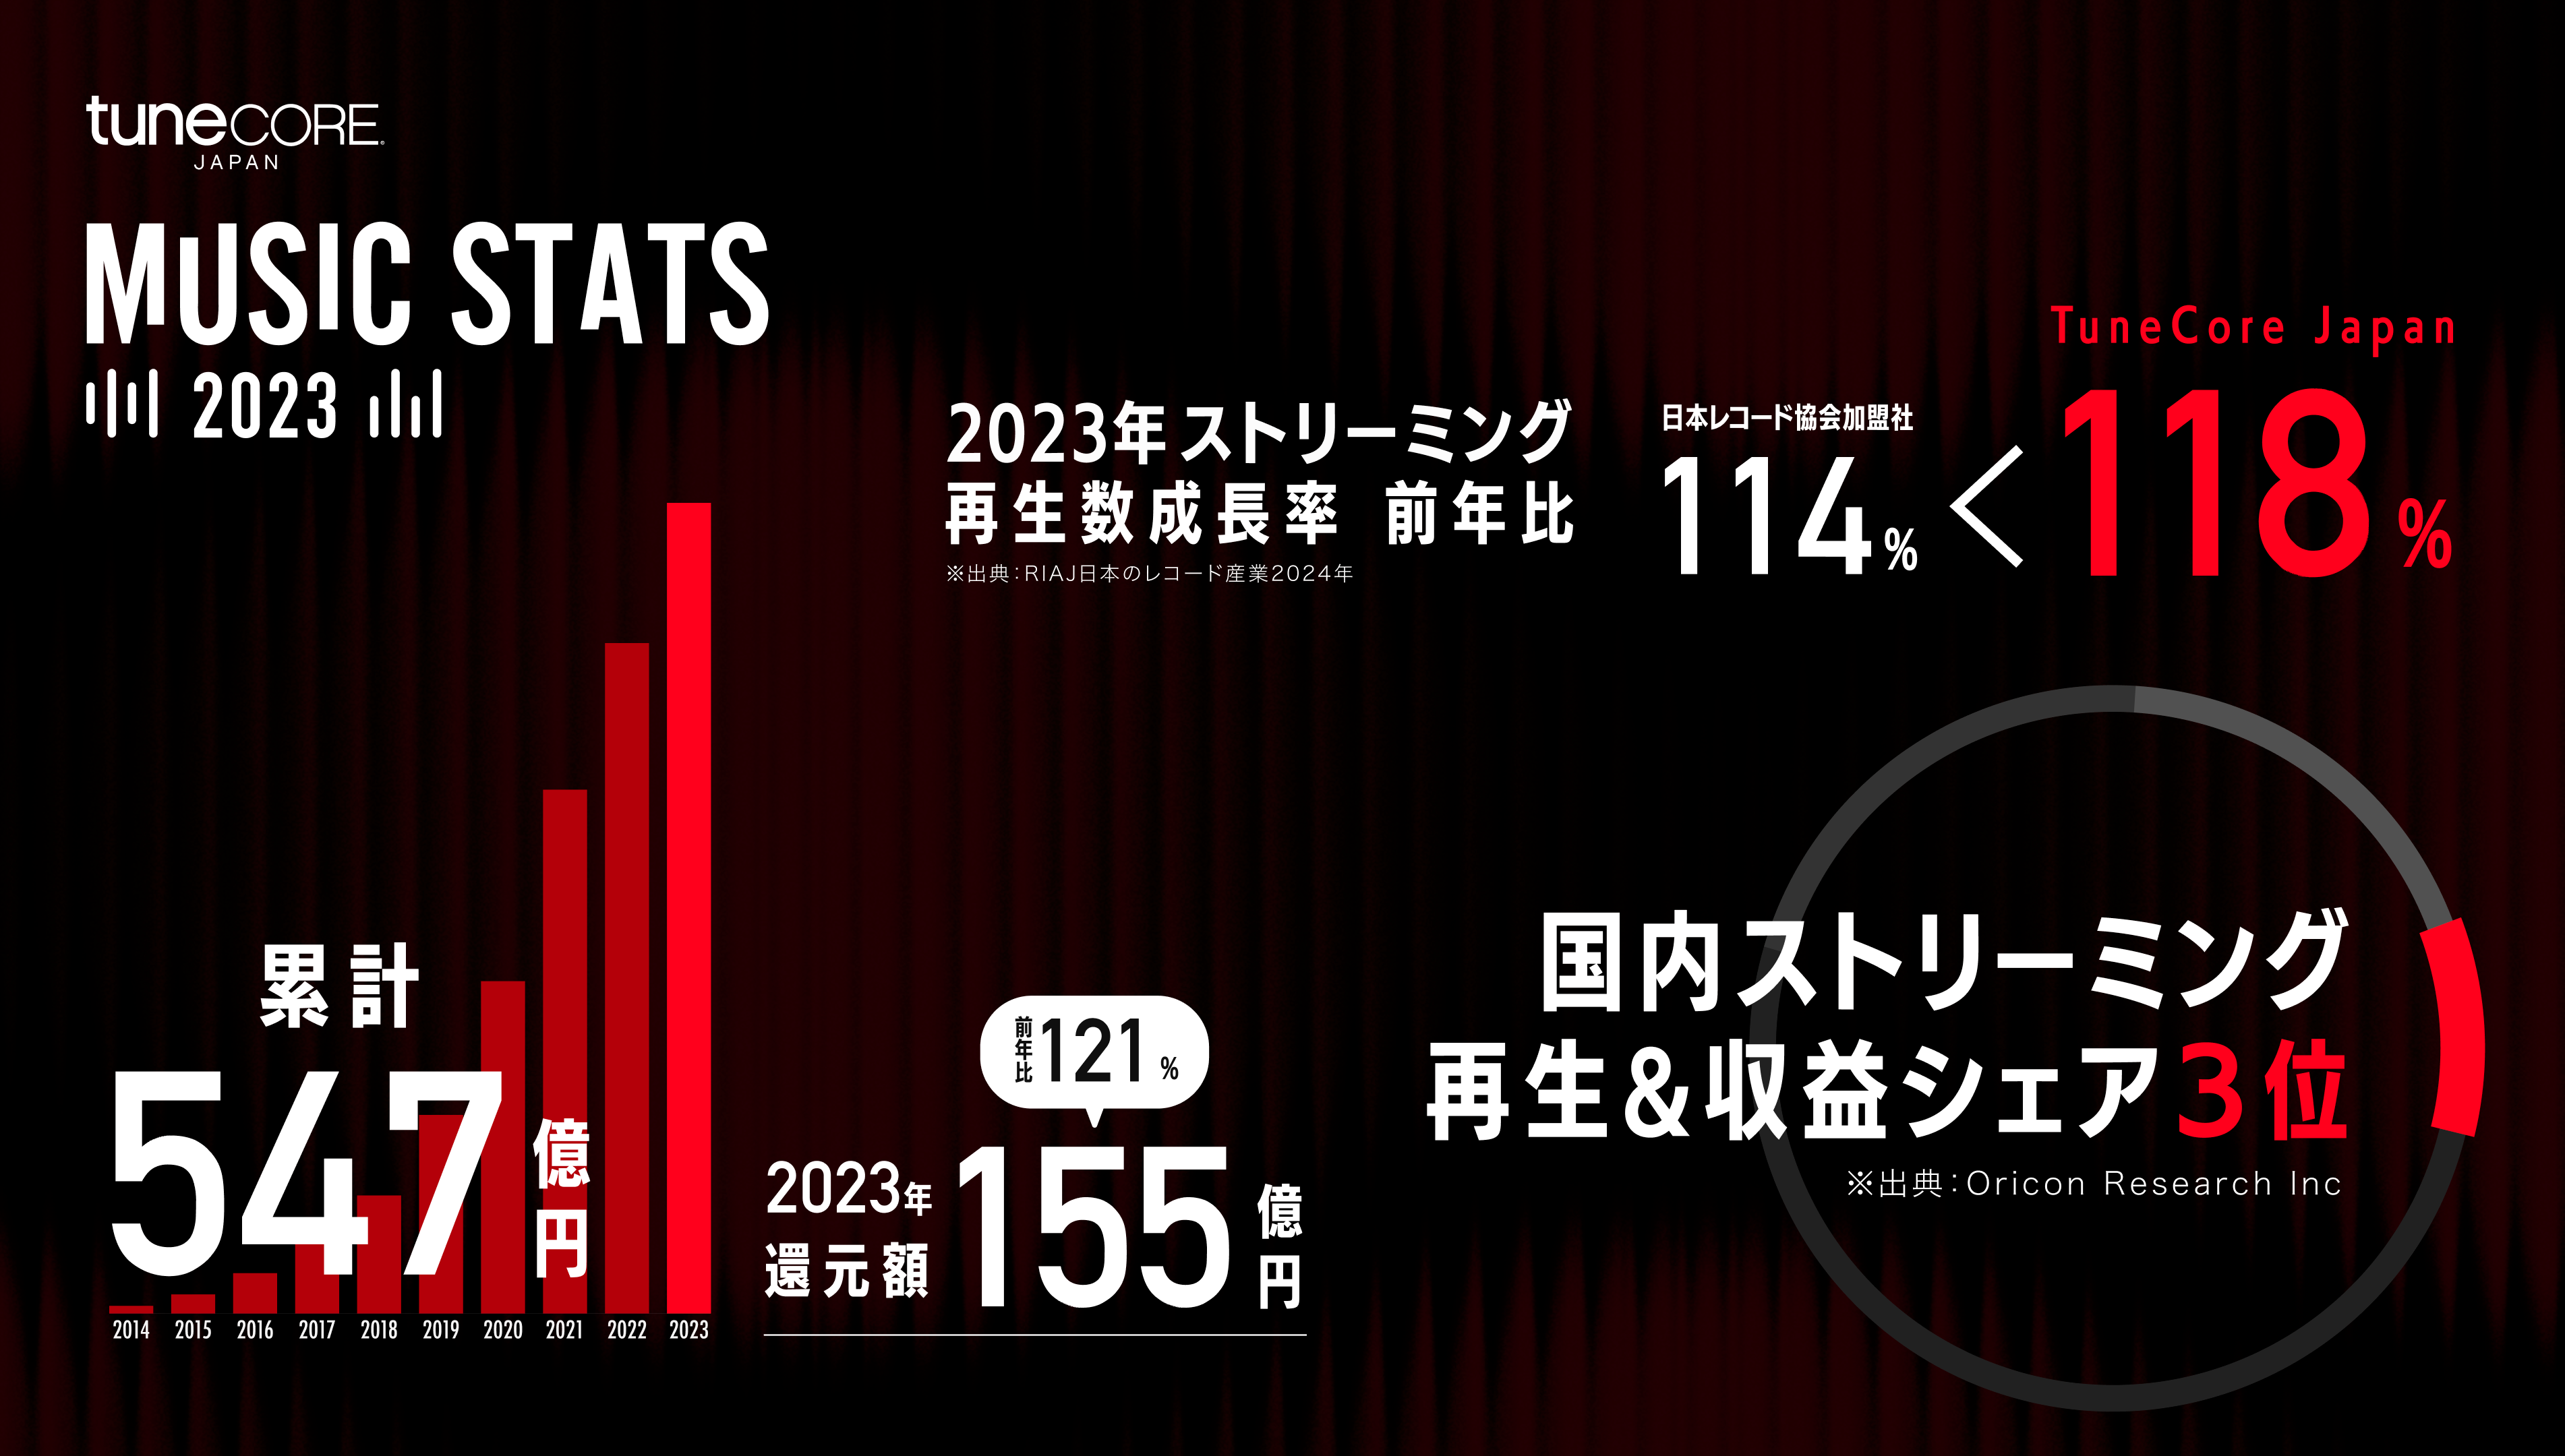 TuneCore JapanwMusic Stats 2023xJApA[eBXgւ̔NԊҌz155~ \ CfByfgA[eBXg̖i